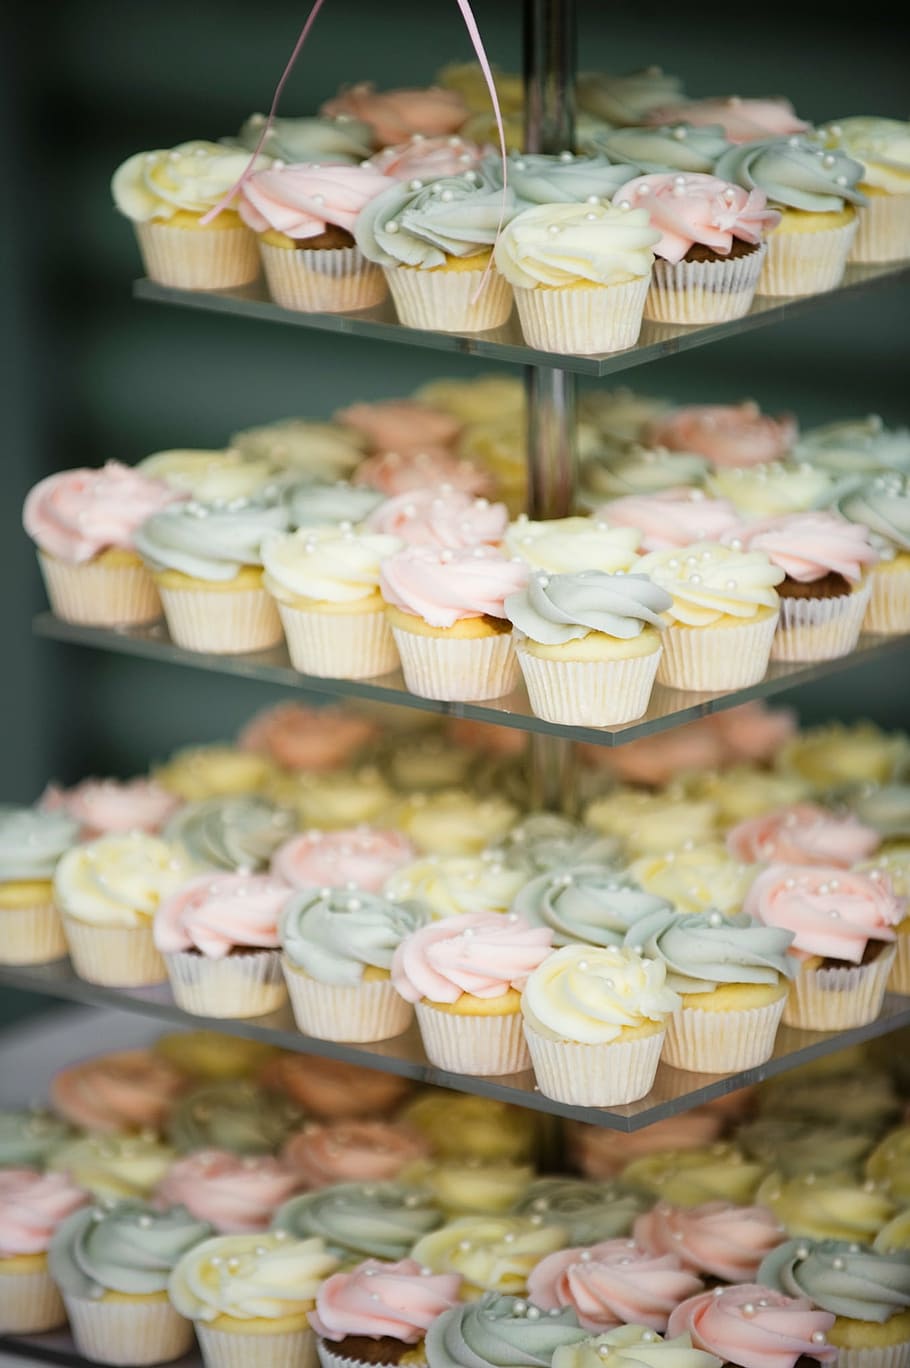 cupcakes, assorted-color icing, glass rack, cake, cupcake, party, wedding cake, birthday cake, cakes, birthday